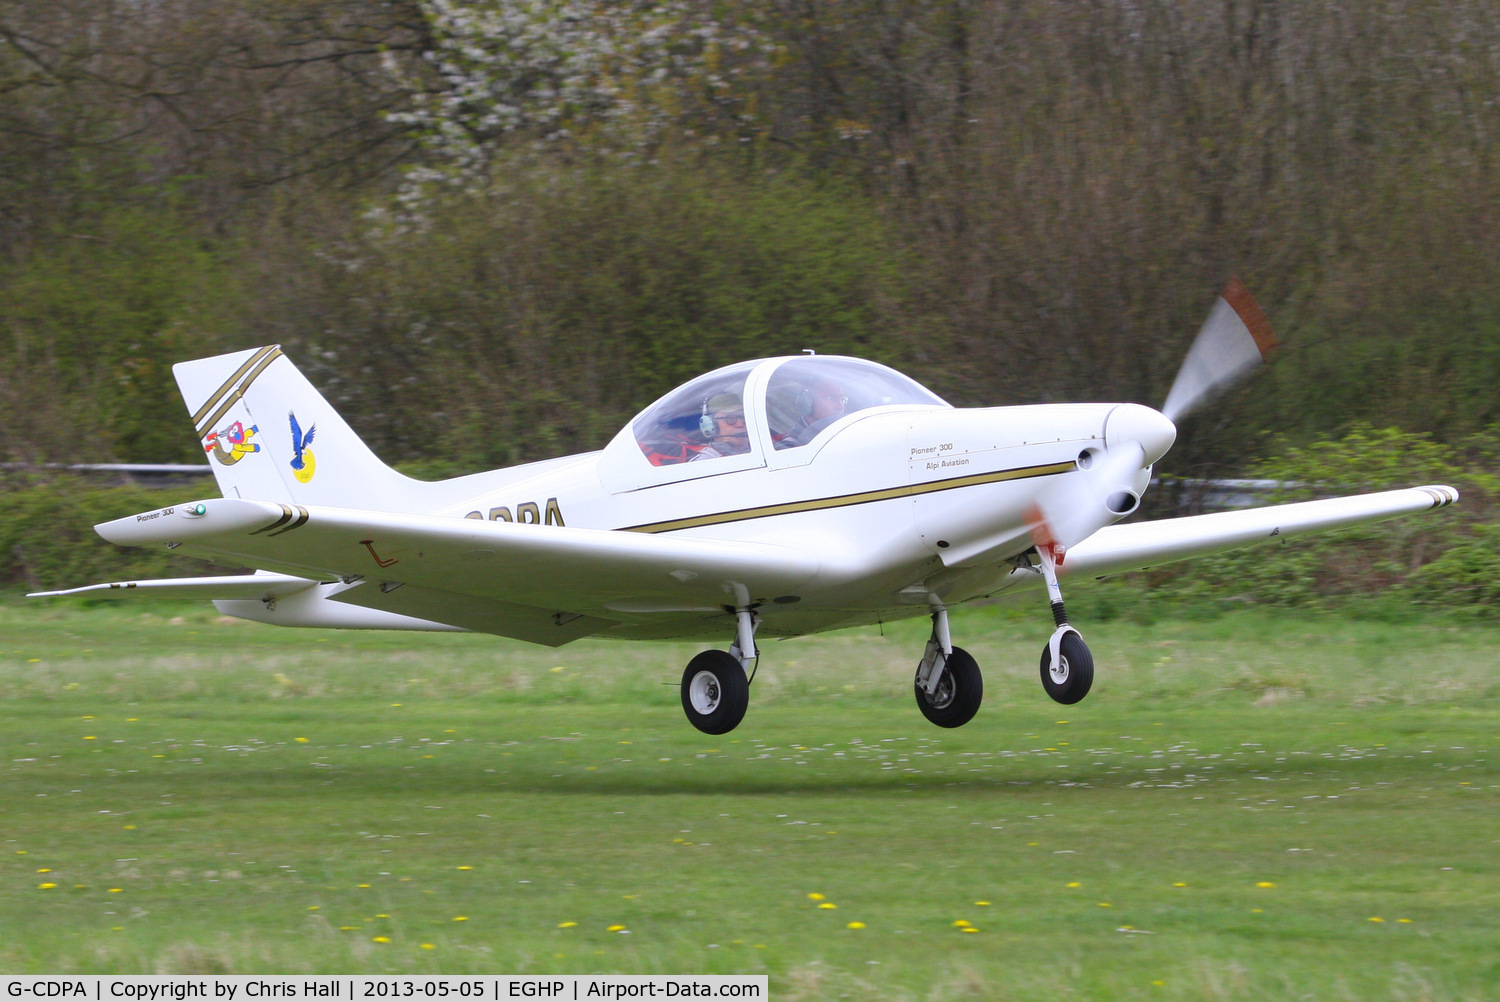 G-CDPA, 2005 Alpi Aviation Pioneer 300 C/N PFA 330-14415, at the LAA Microlight Trade Fair, Popham